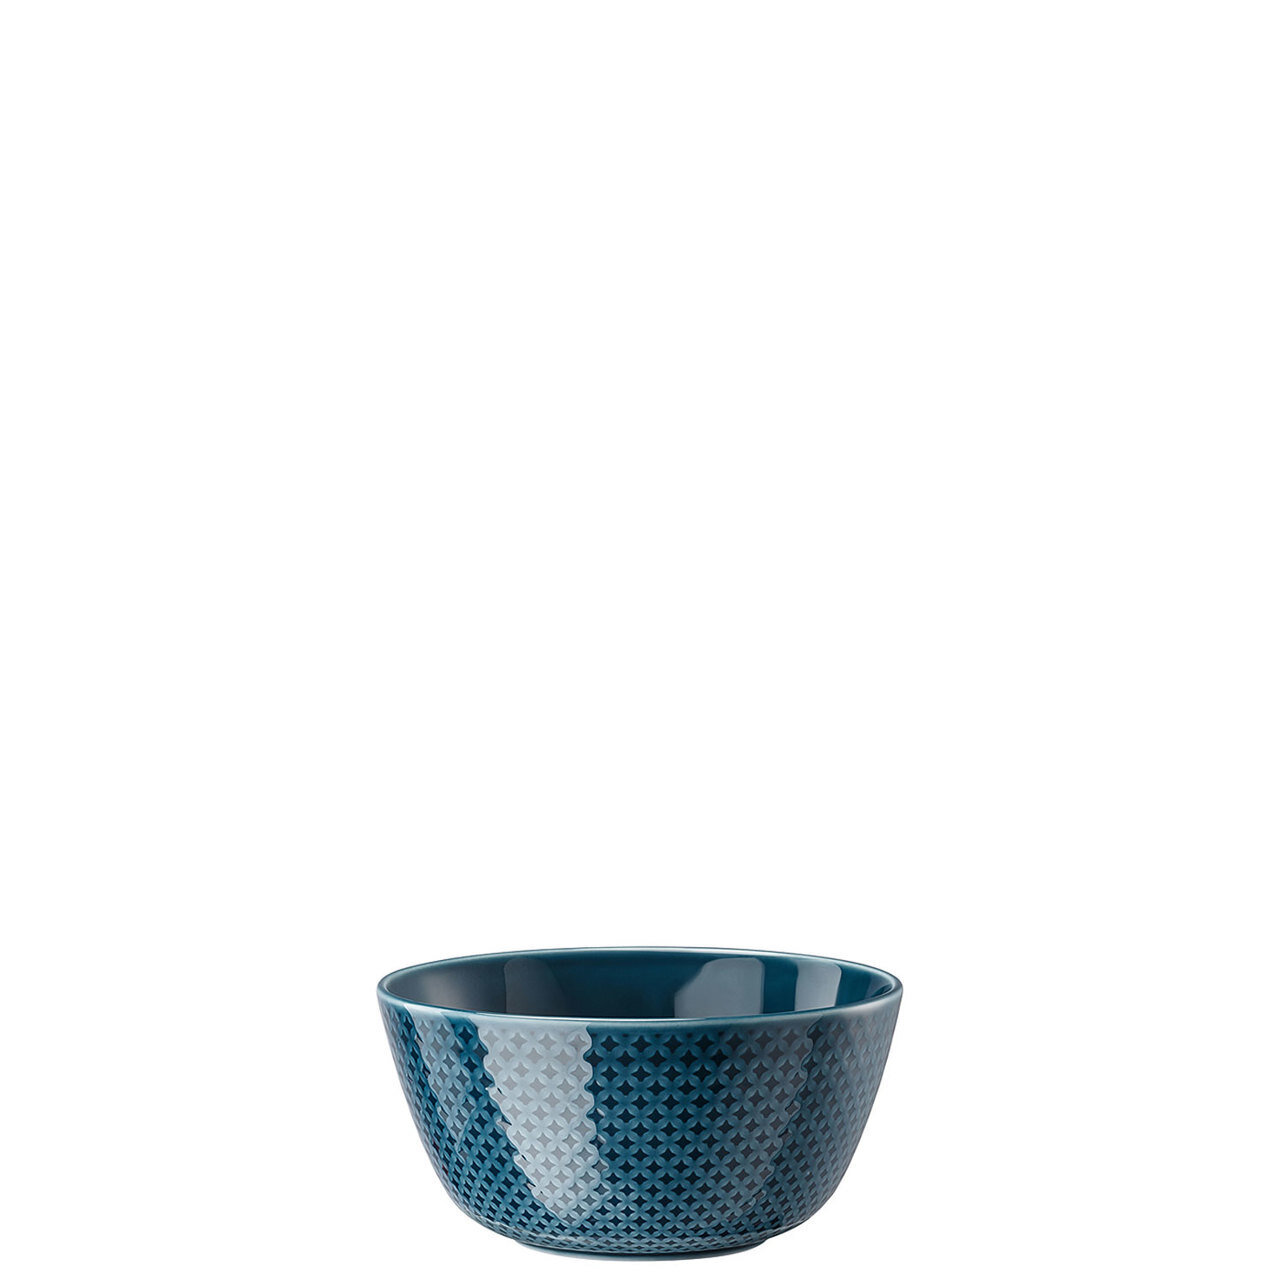 Rosenthal Junto Ocean Blue Cereal Bowl 5 1/2 Inch 21 oz